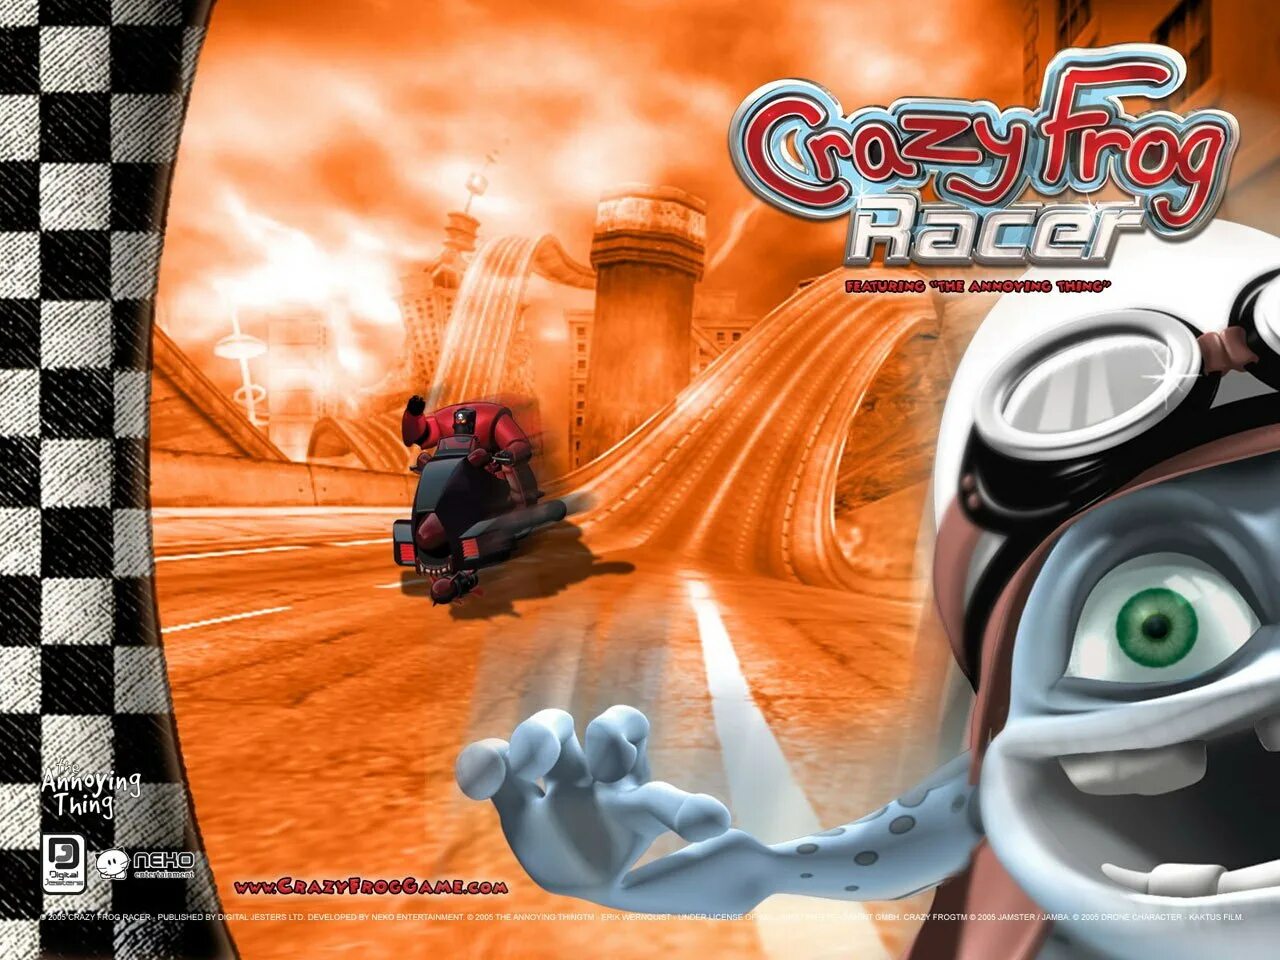 РС Crazy Frog Racer 2. Crazy Frog Racer (2005) ps2. Crazy Frog Racer бобо. Crazy Frog Racer игрушка.